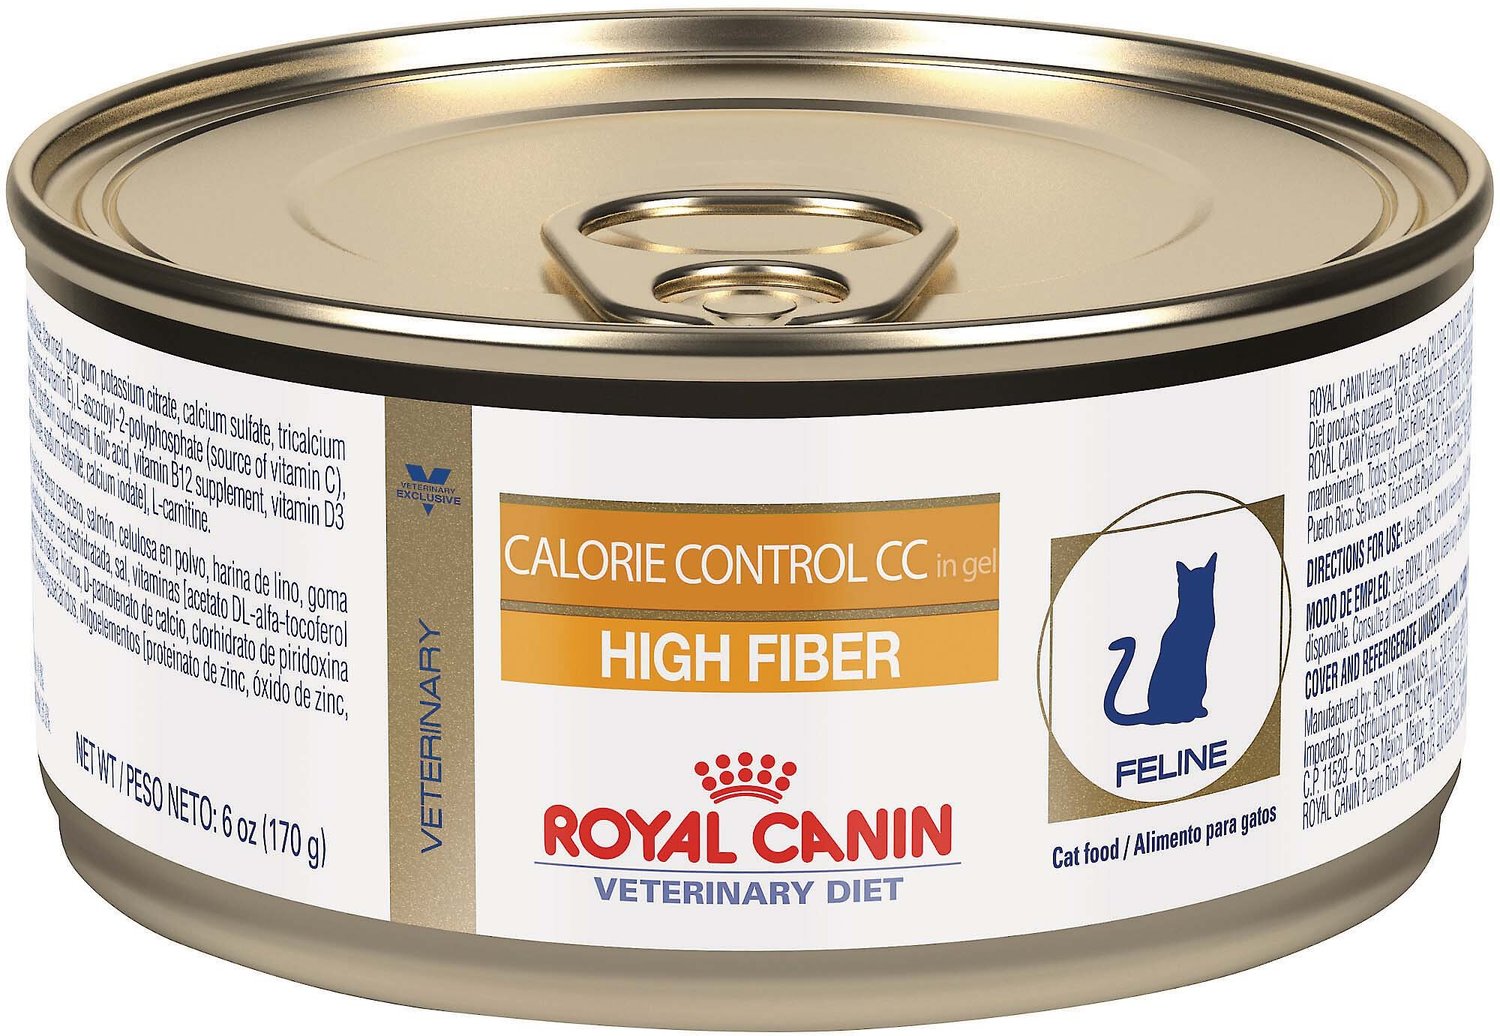 Royal Canin Veterinary Diet Calorie Control CC High Fiber Formula